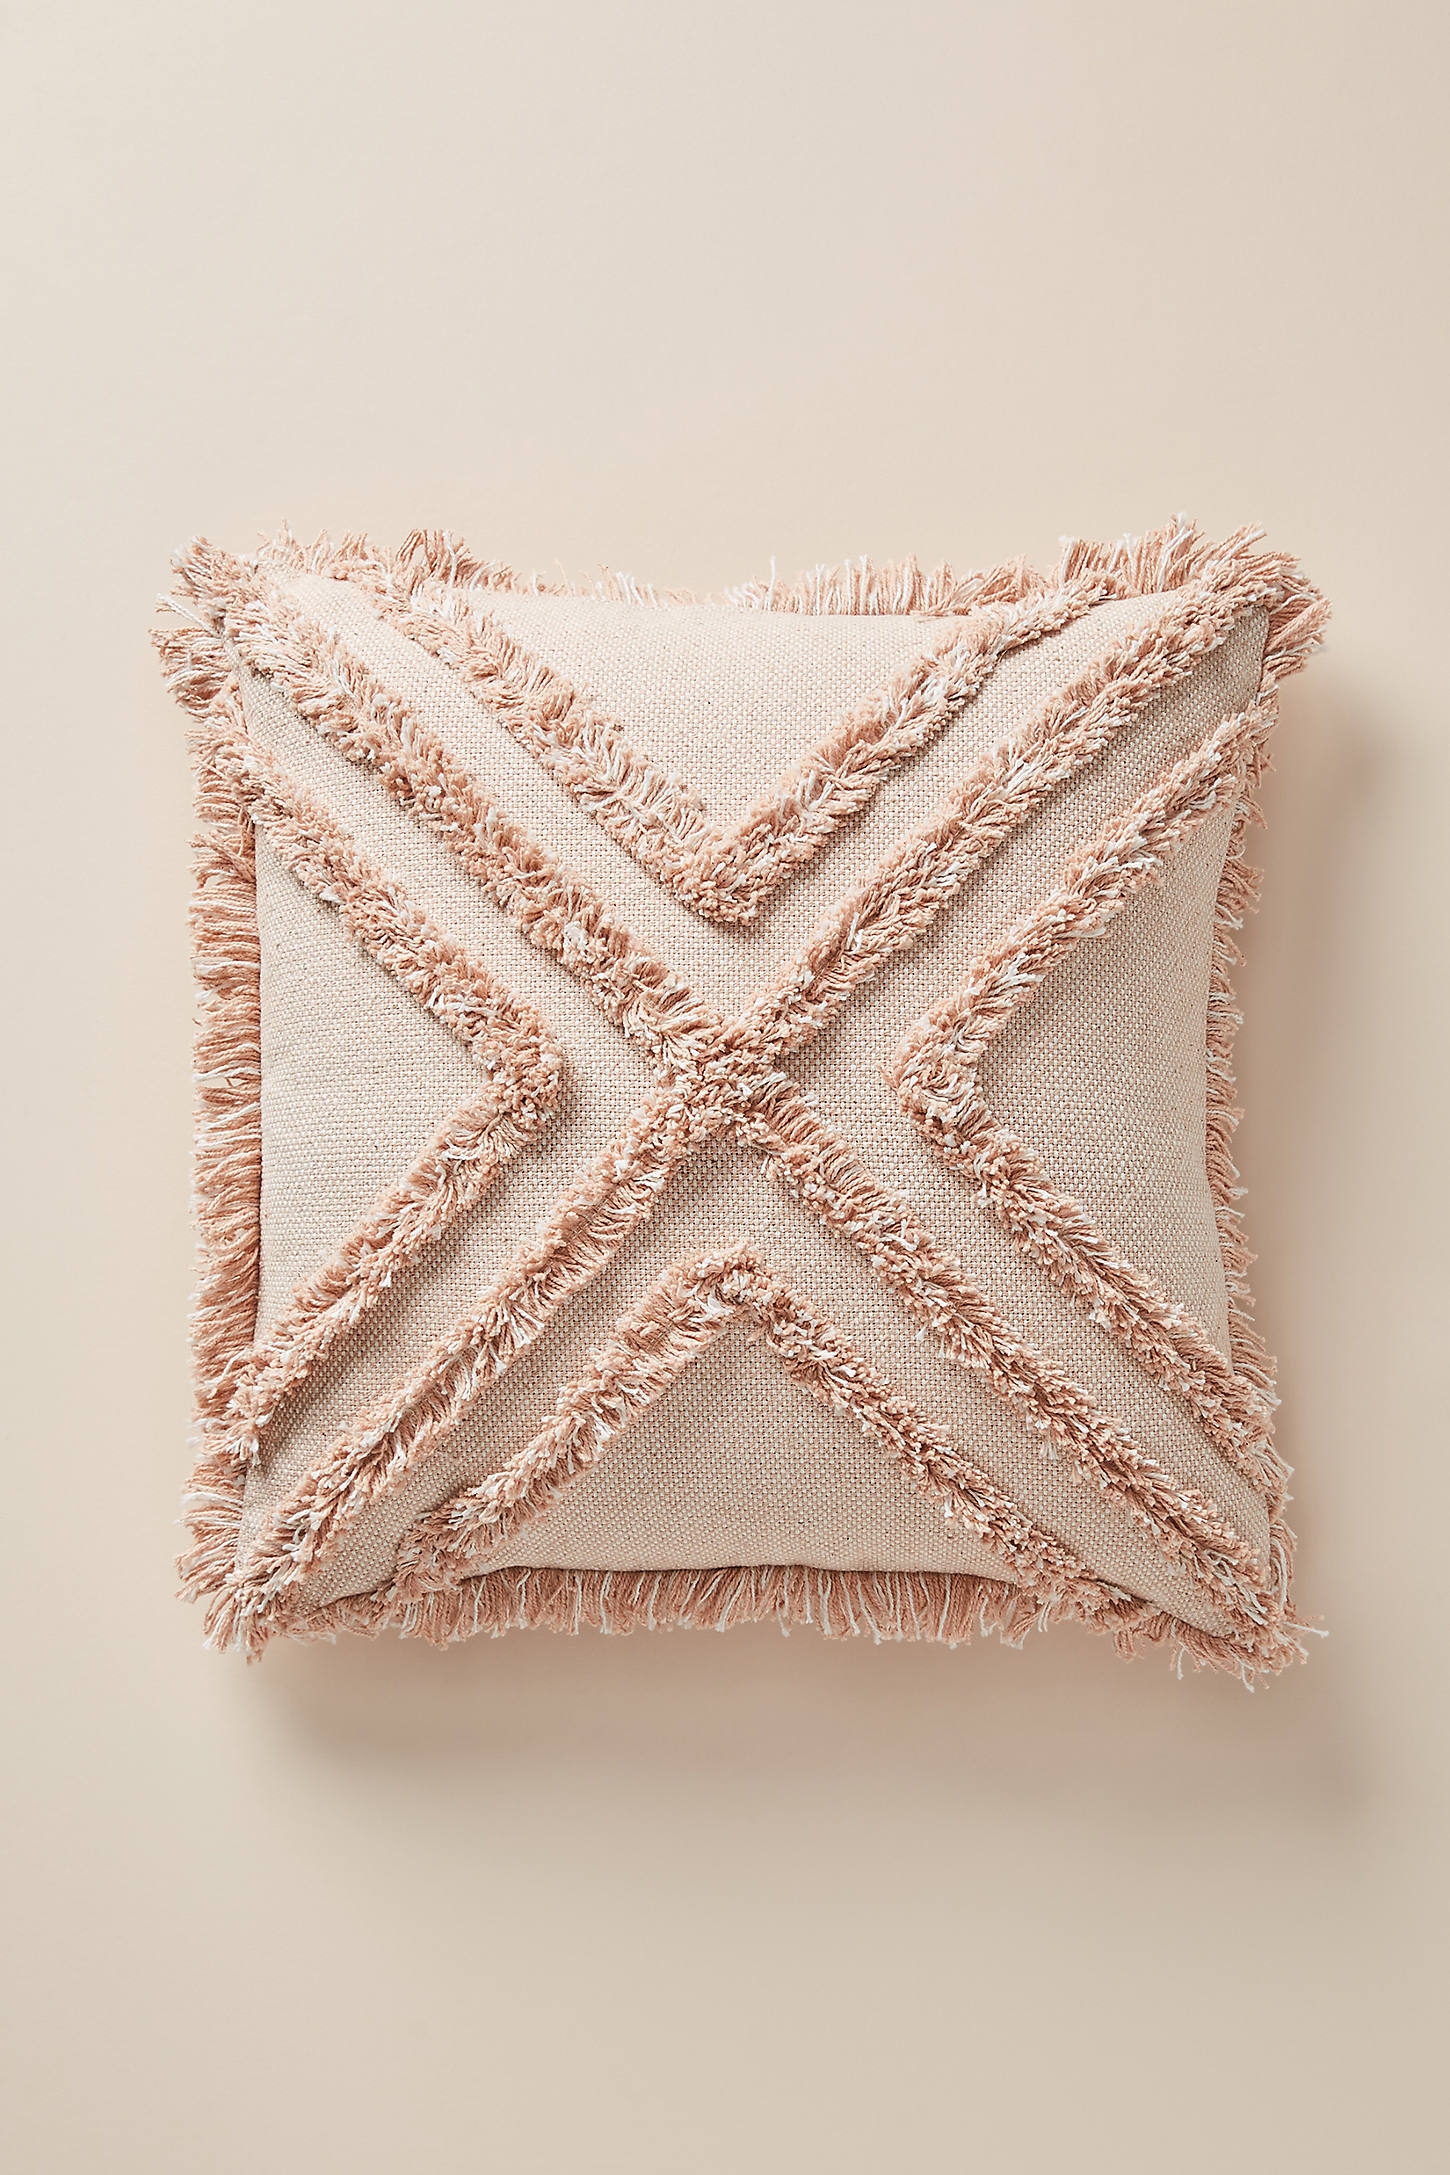 Textured Correll Pillow - Image 0